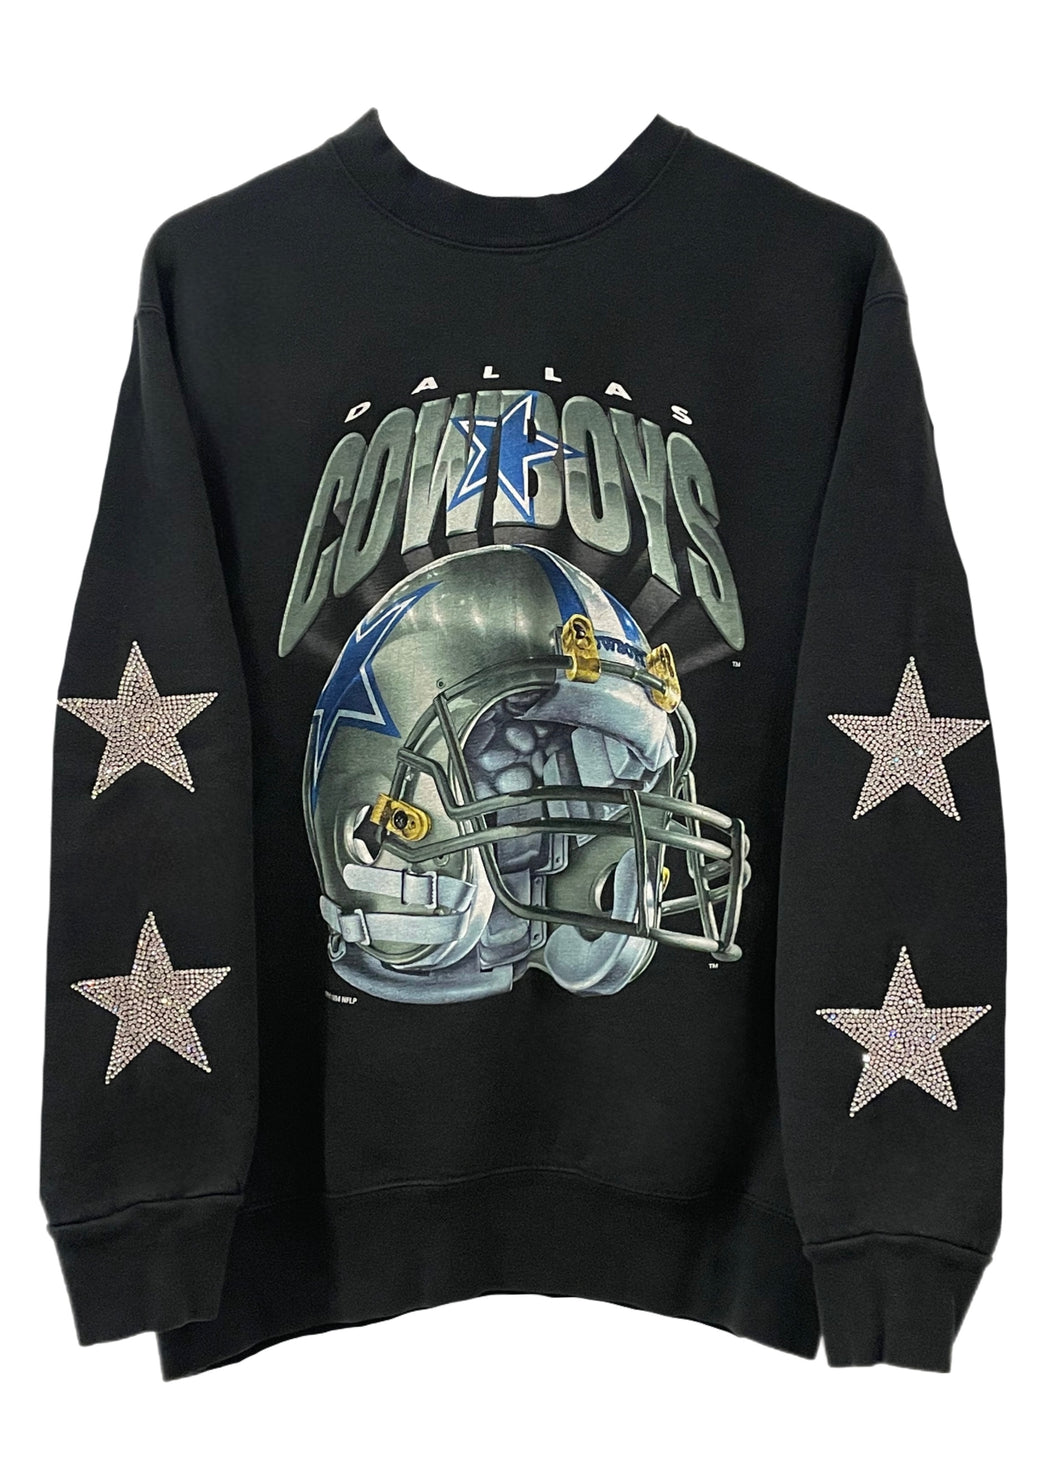 Dallas Cowboys, NFL One of a KIND Vintage   Sweatshirt with Crystal Star Design.